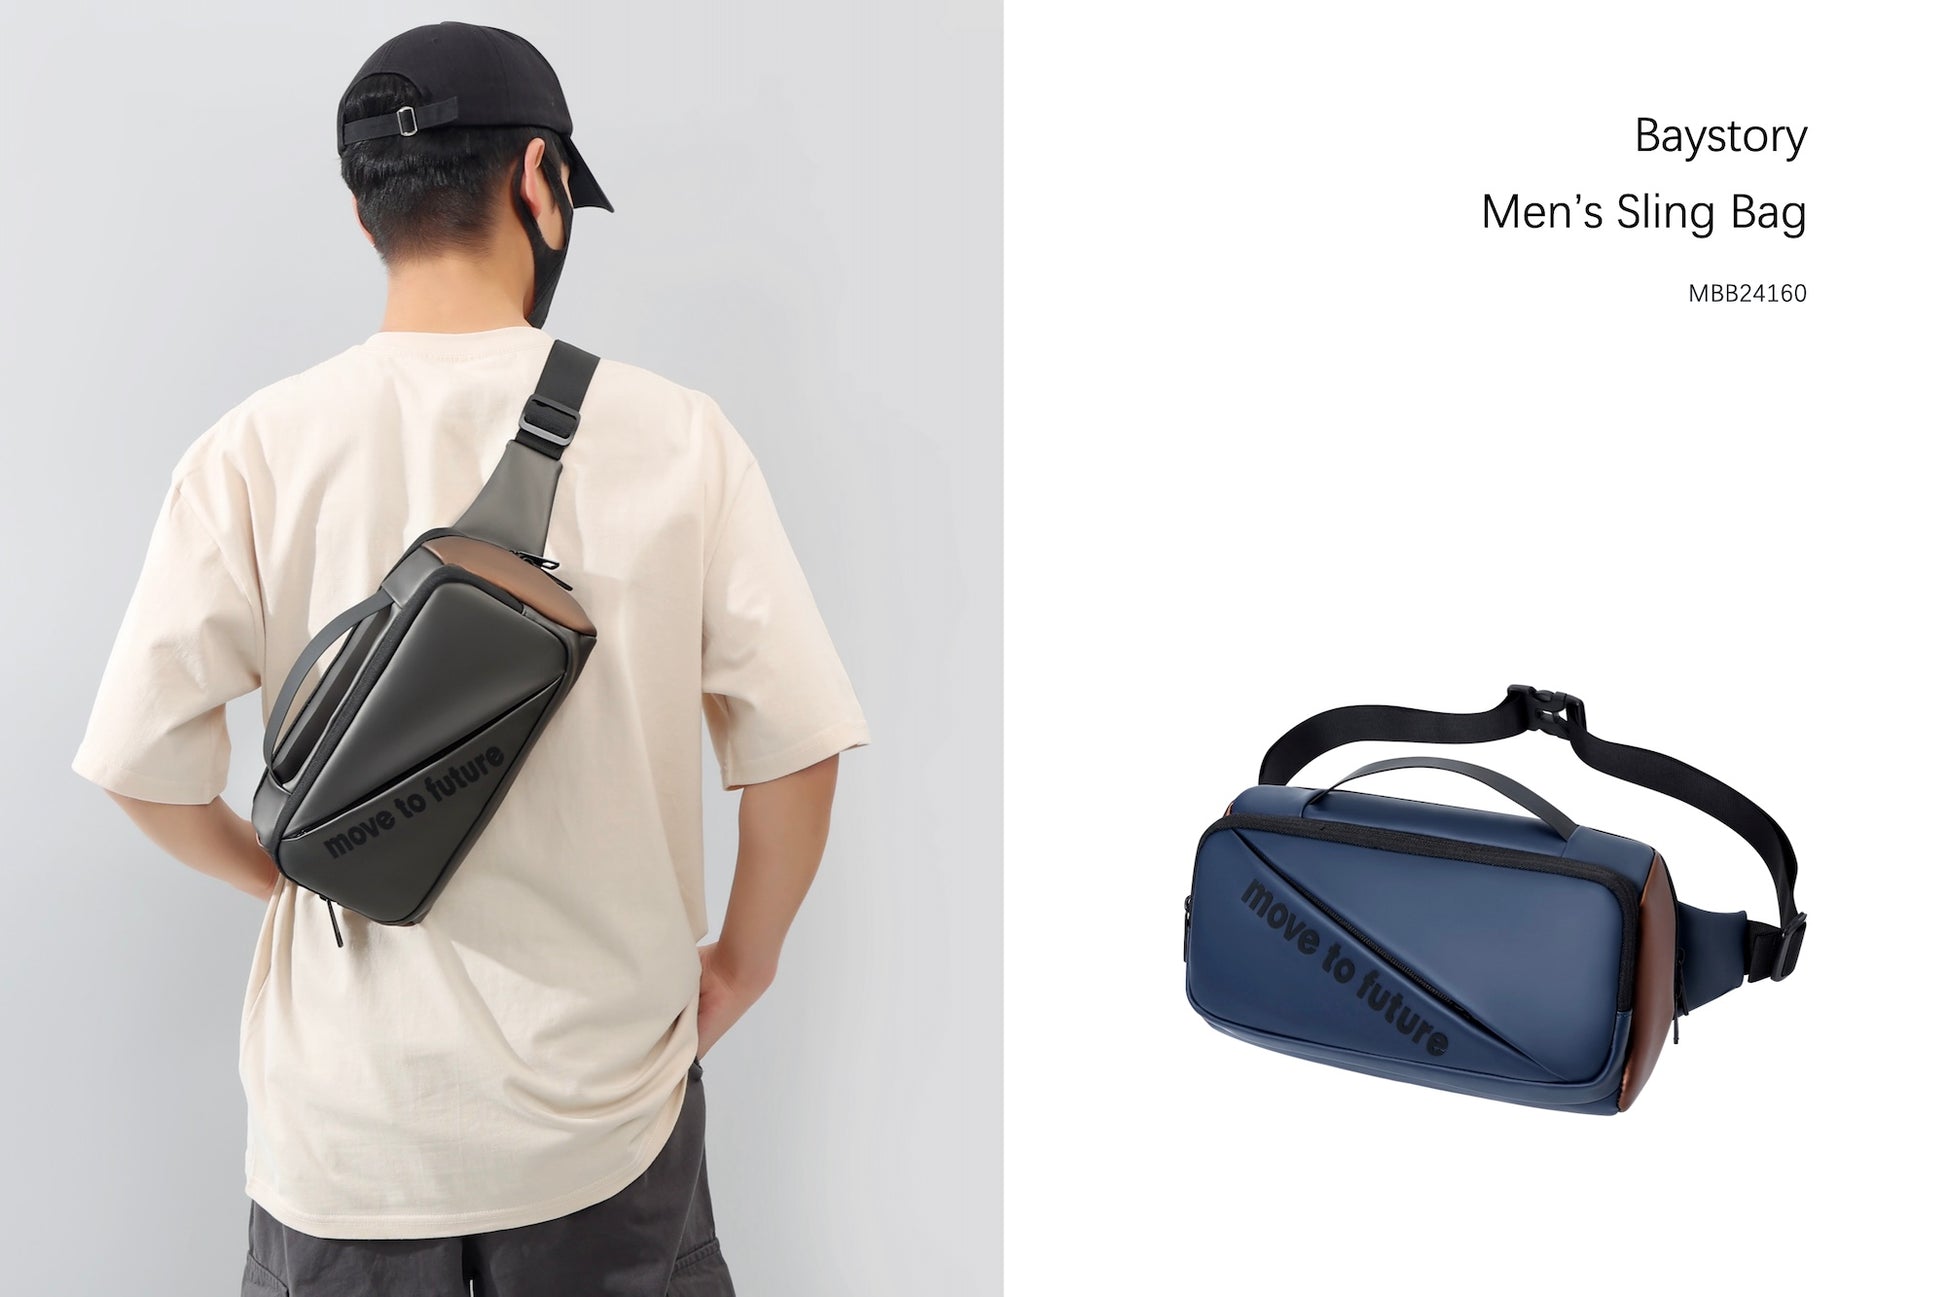 Men's Sling Bag MBB24160 - Baystory